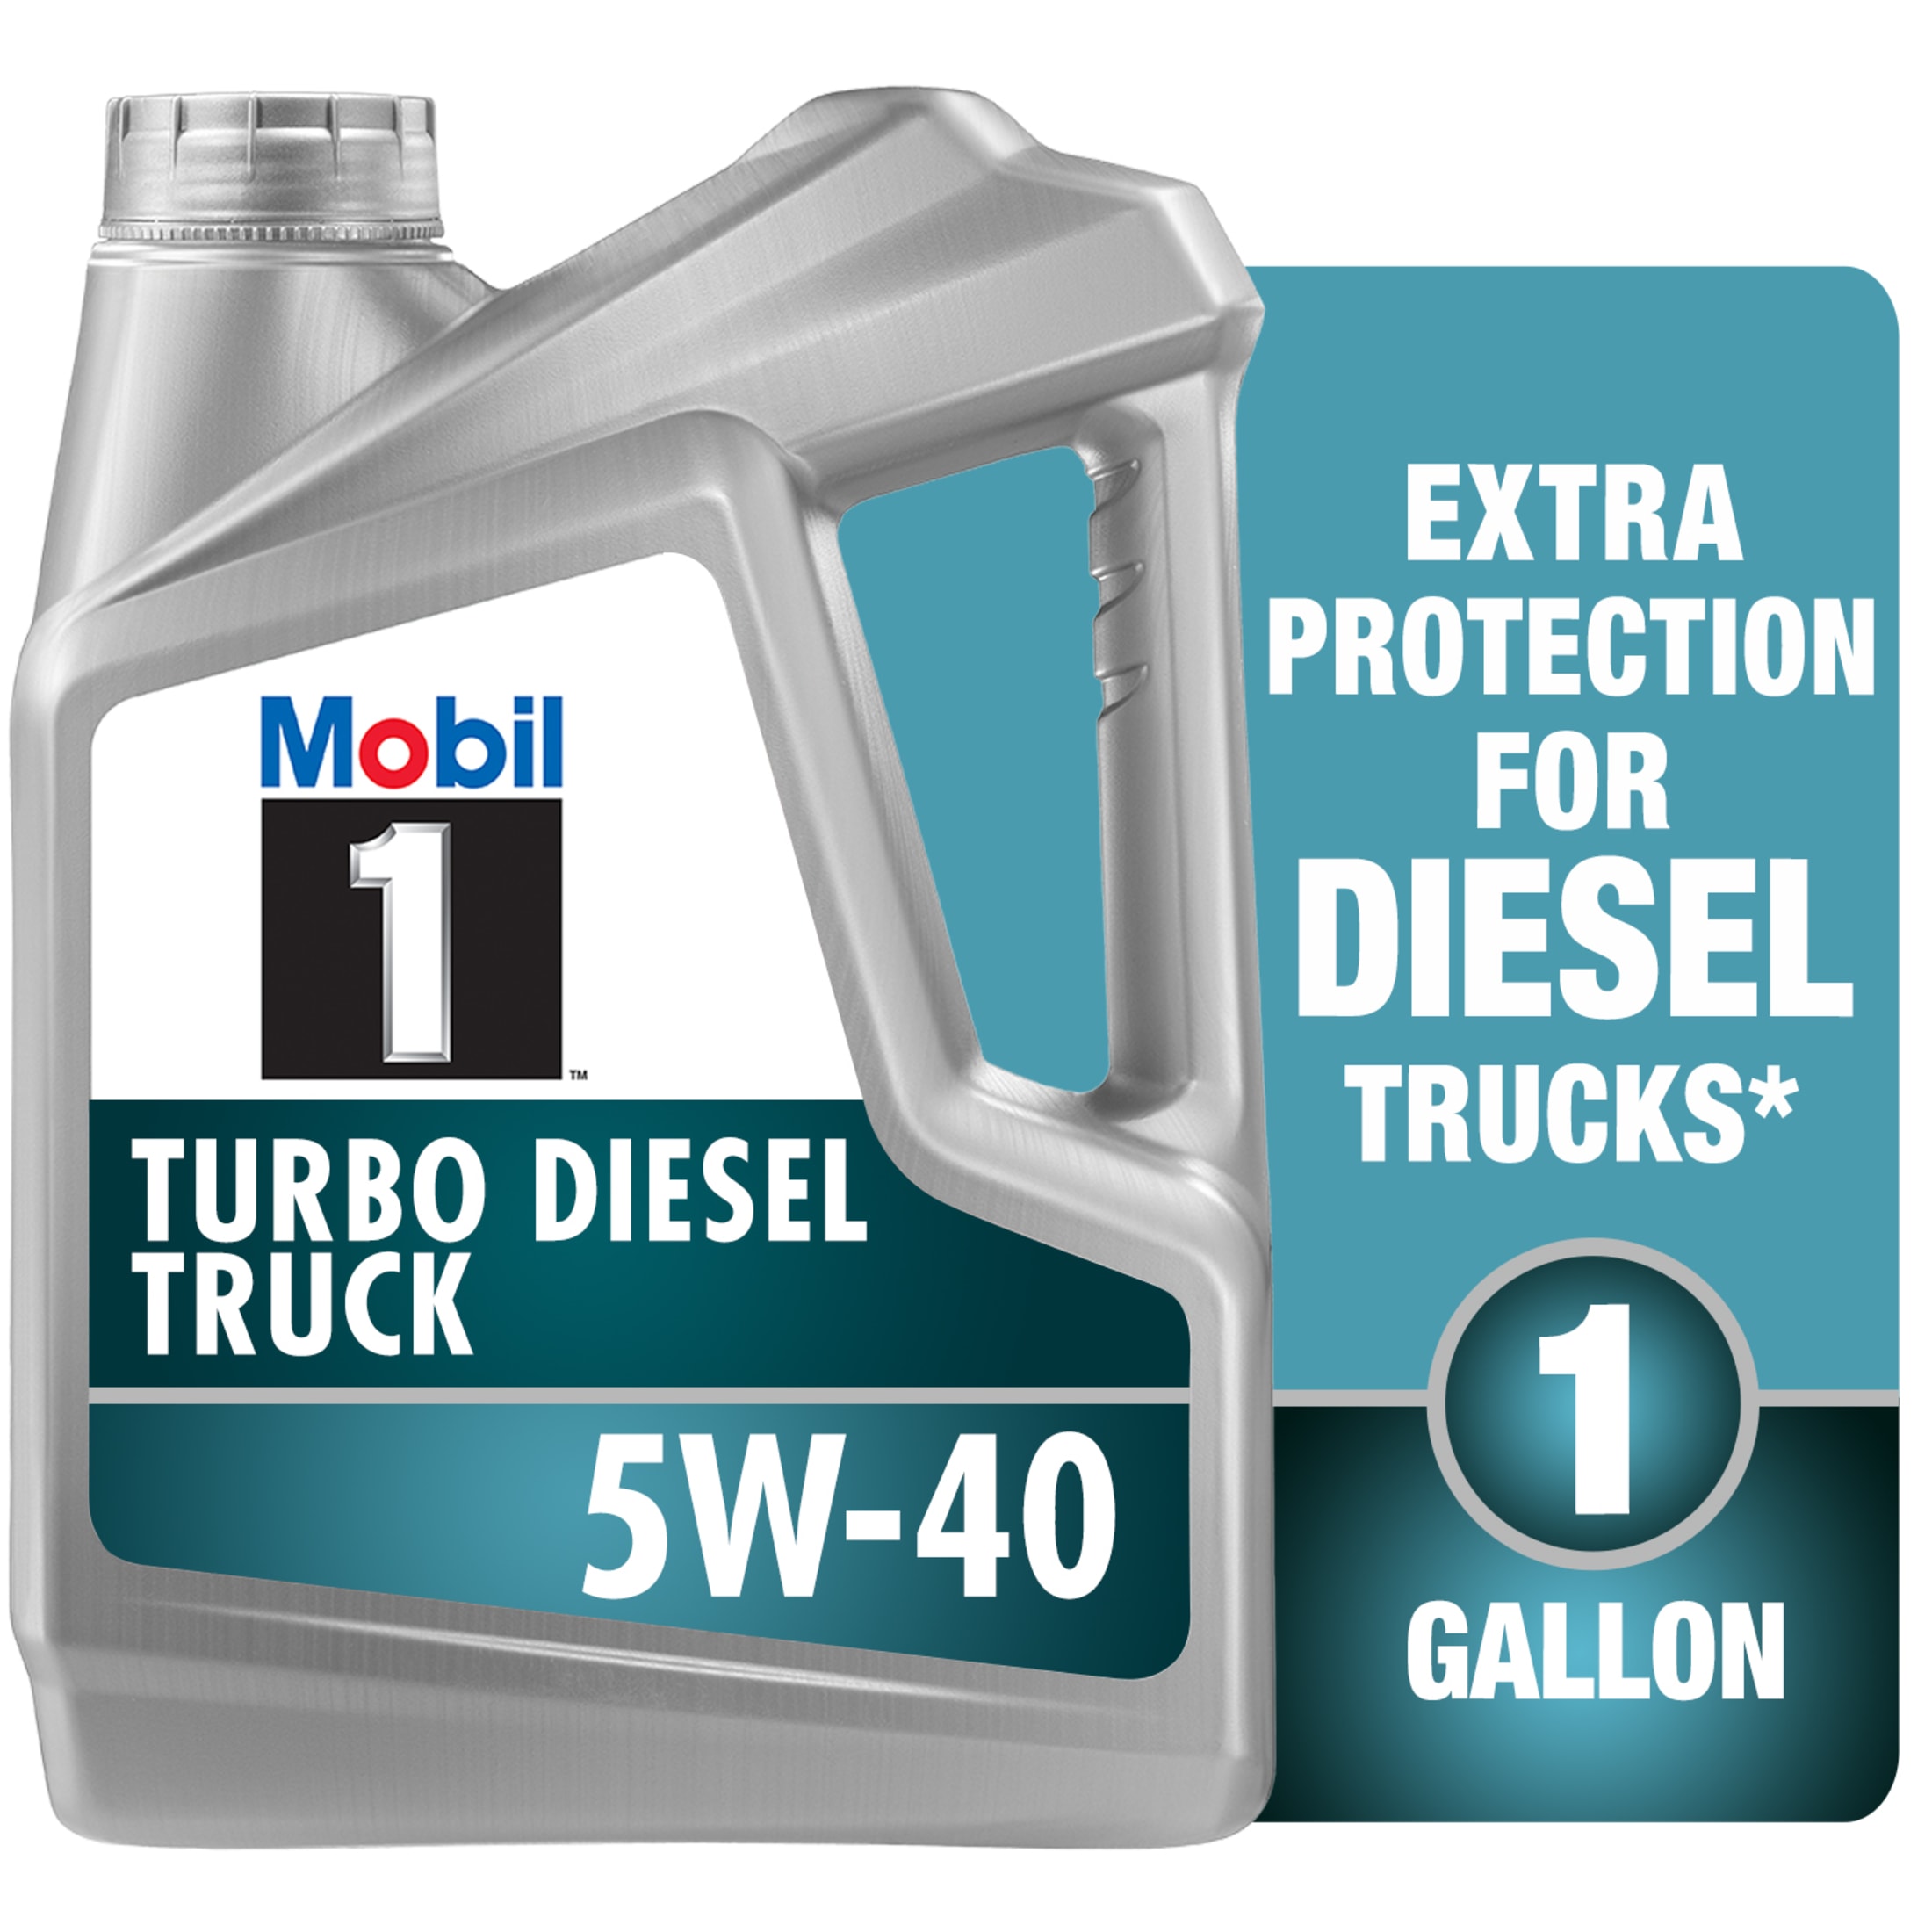 Mobil 1 Turbo Diesel Truck Full Synthetic Motor Oil 5W-40, 1 Gallon - image 2 of 8